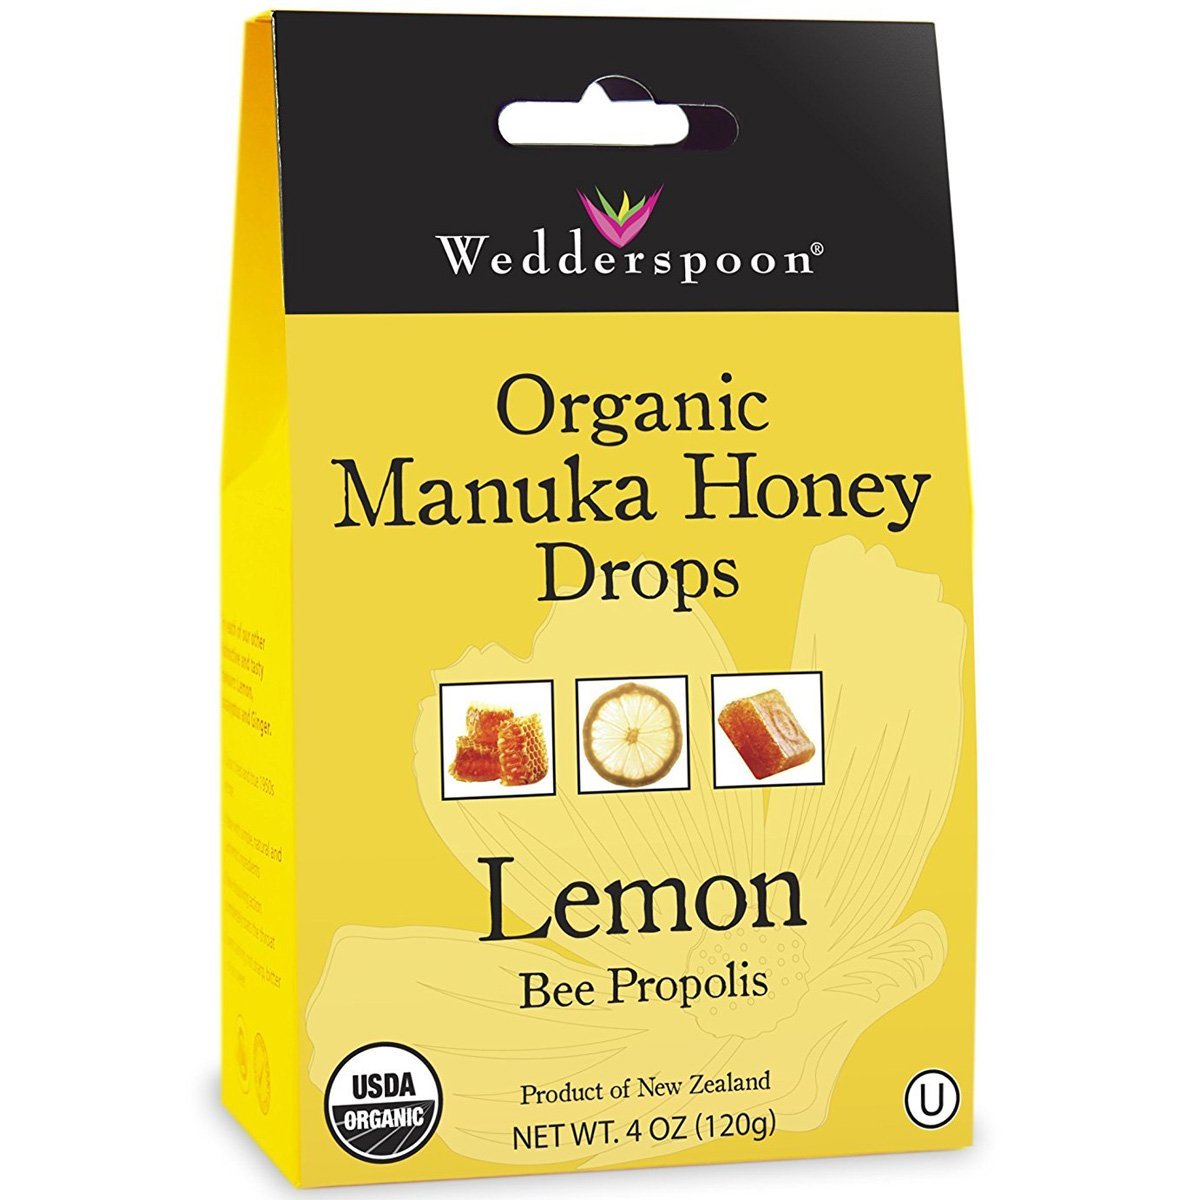 Wedderspoon Organic Manuka Honey Drops Lemon, 4.0 Ounce